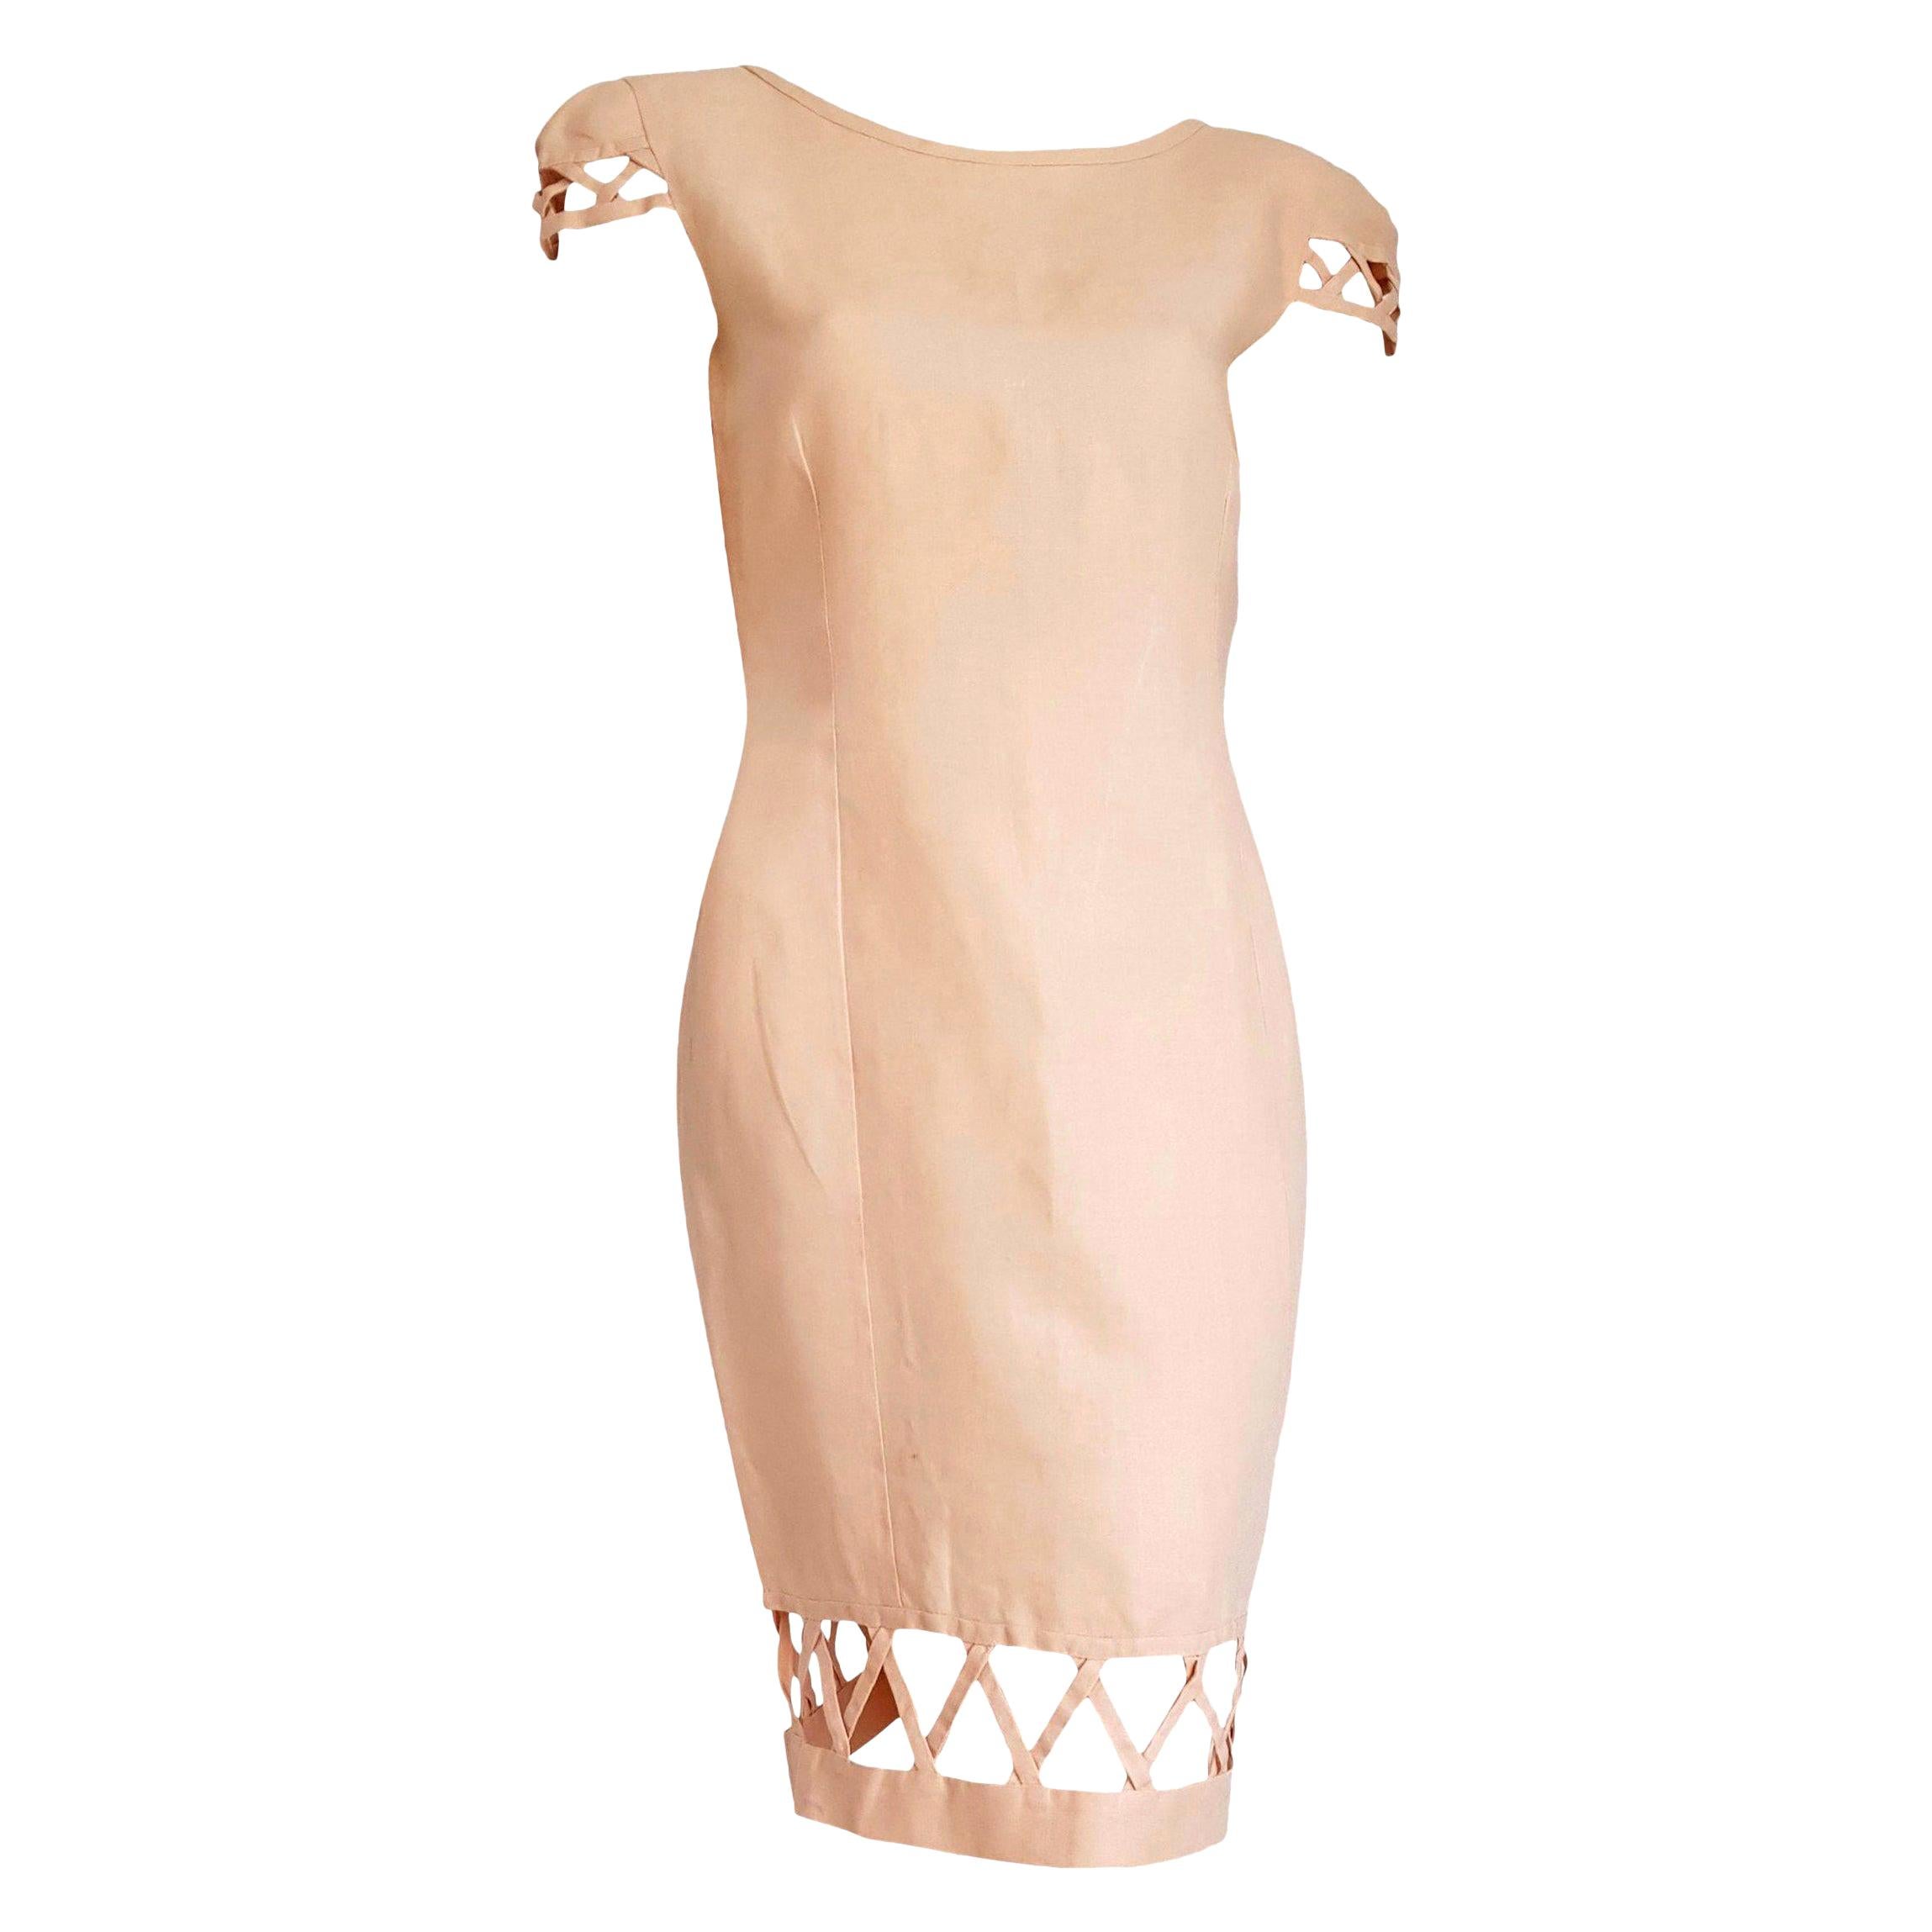 Christian LACROIX "New" Haute Couture Light Salmon Irish Linen Dress - Unworn For Sale